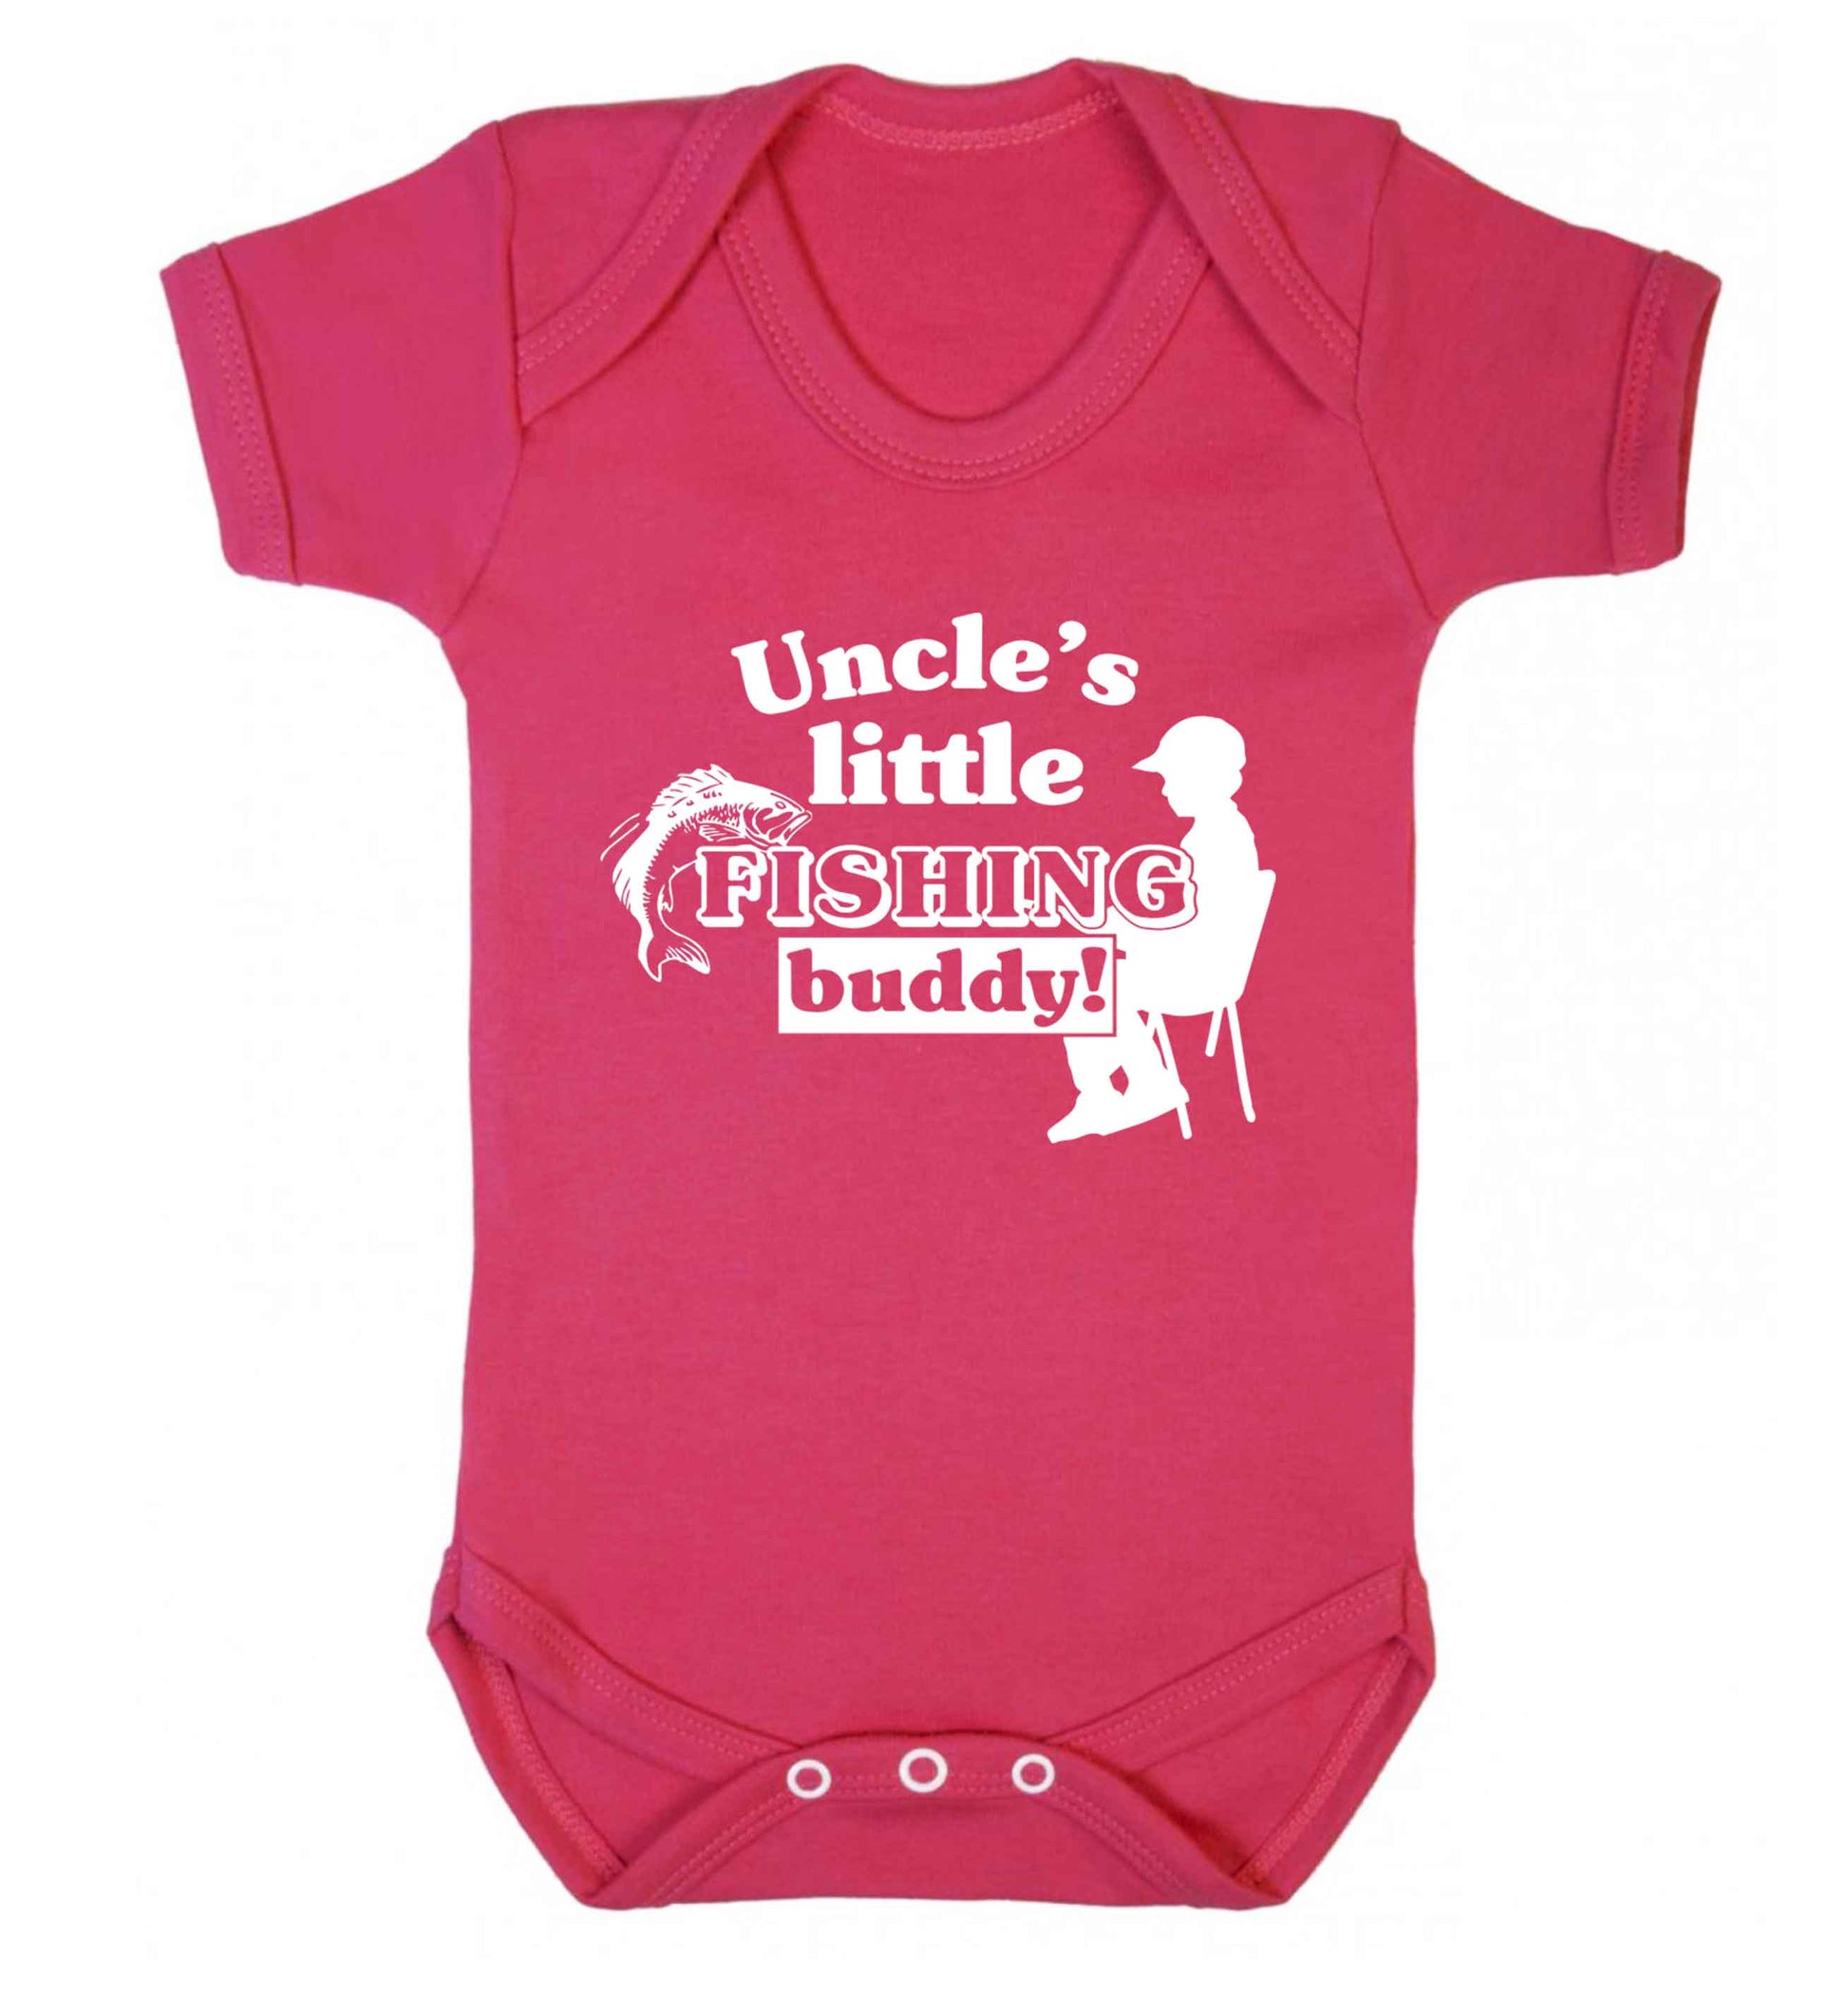 Uncle's little fishing buddy Baby Vest dark pink 18-24 months